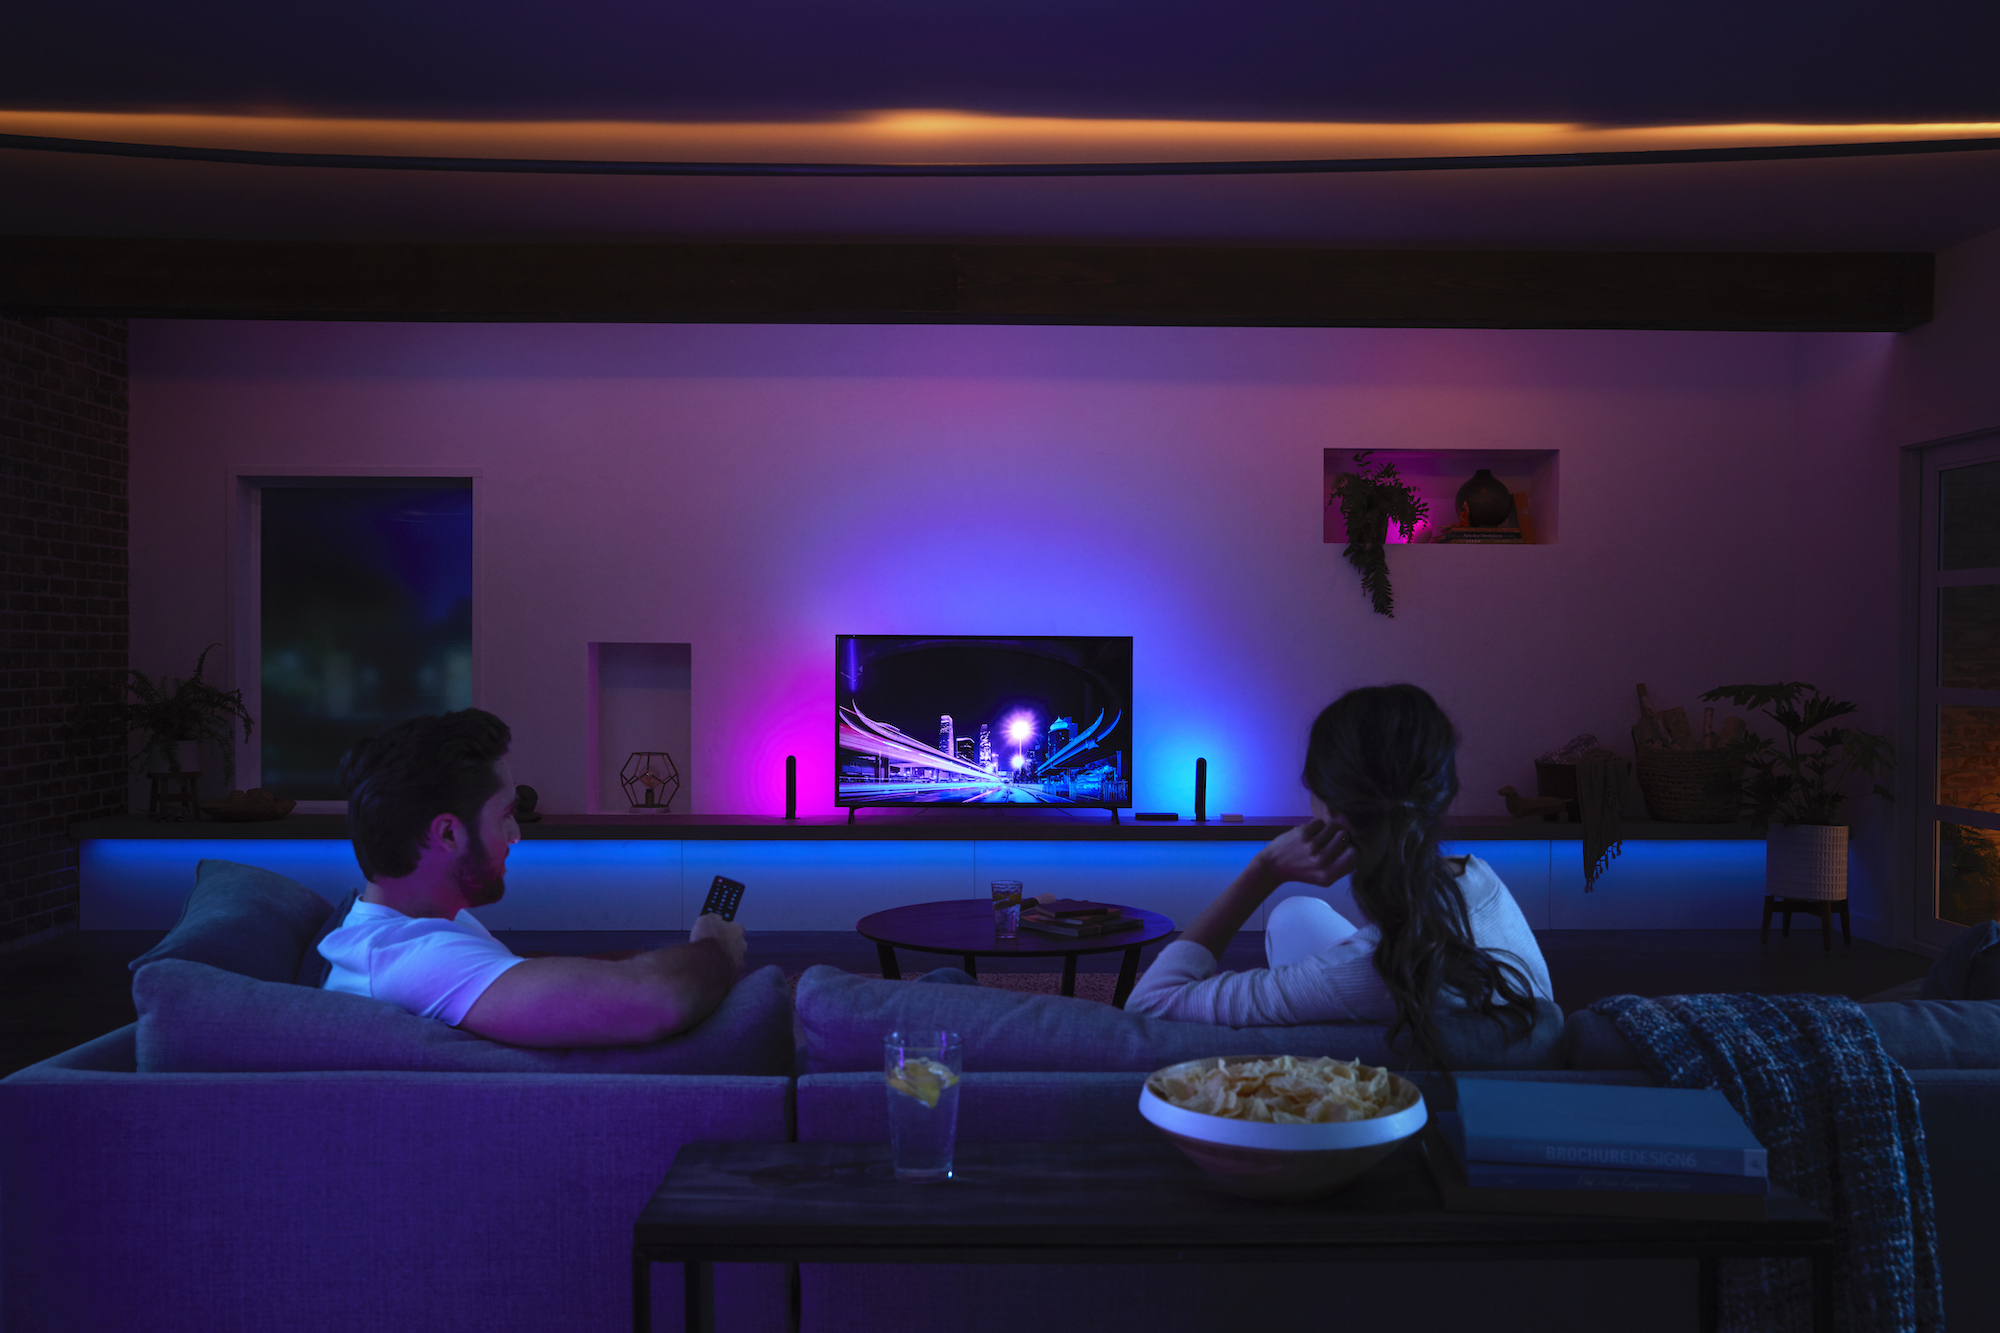 This Philips Hue TV smart lights alternative is on sale